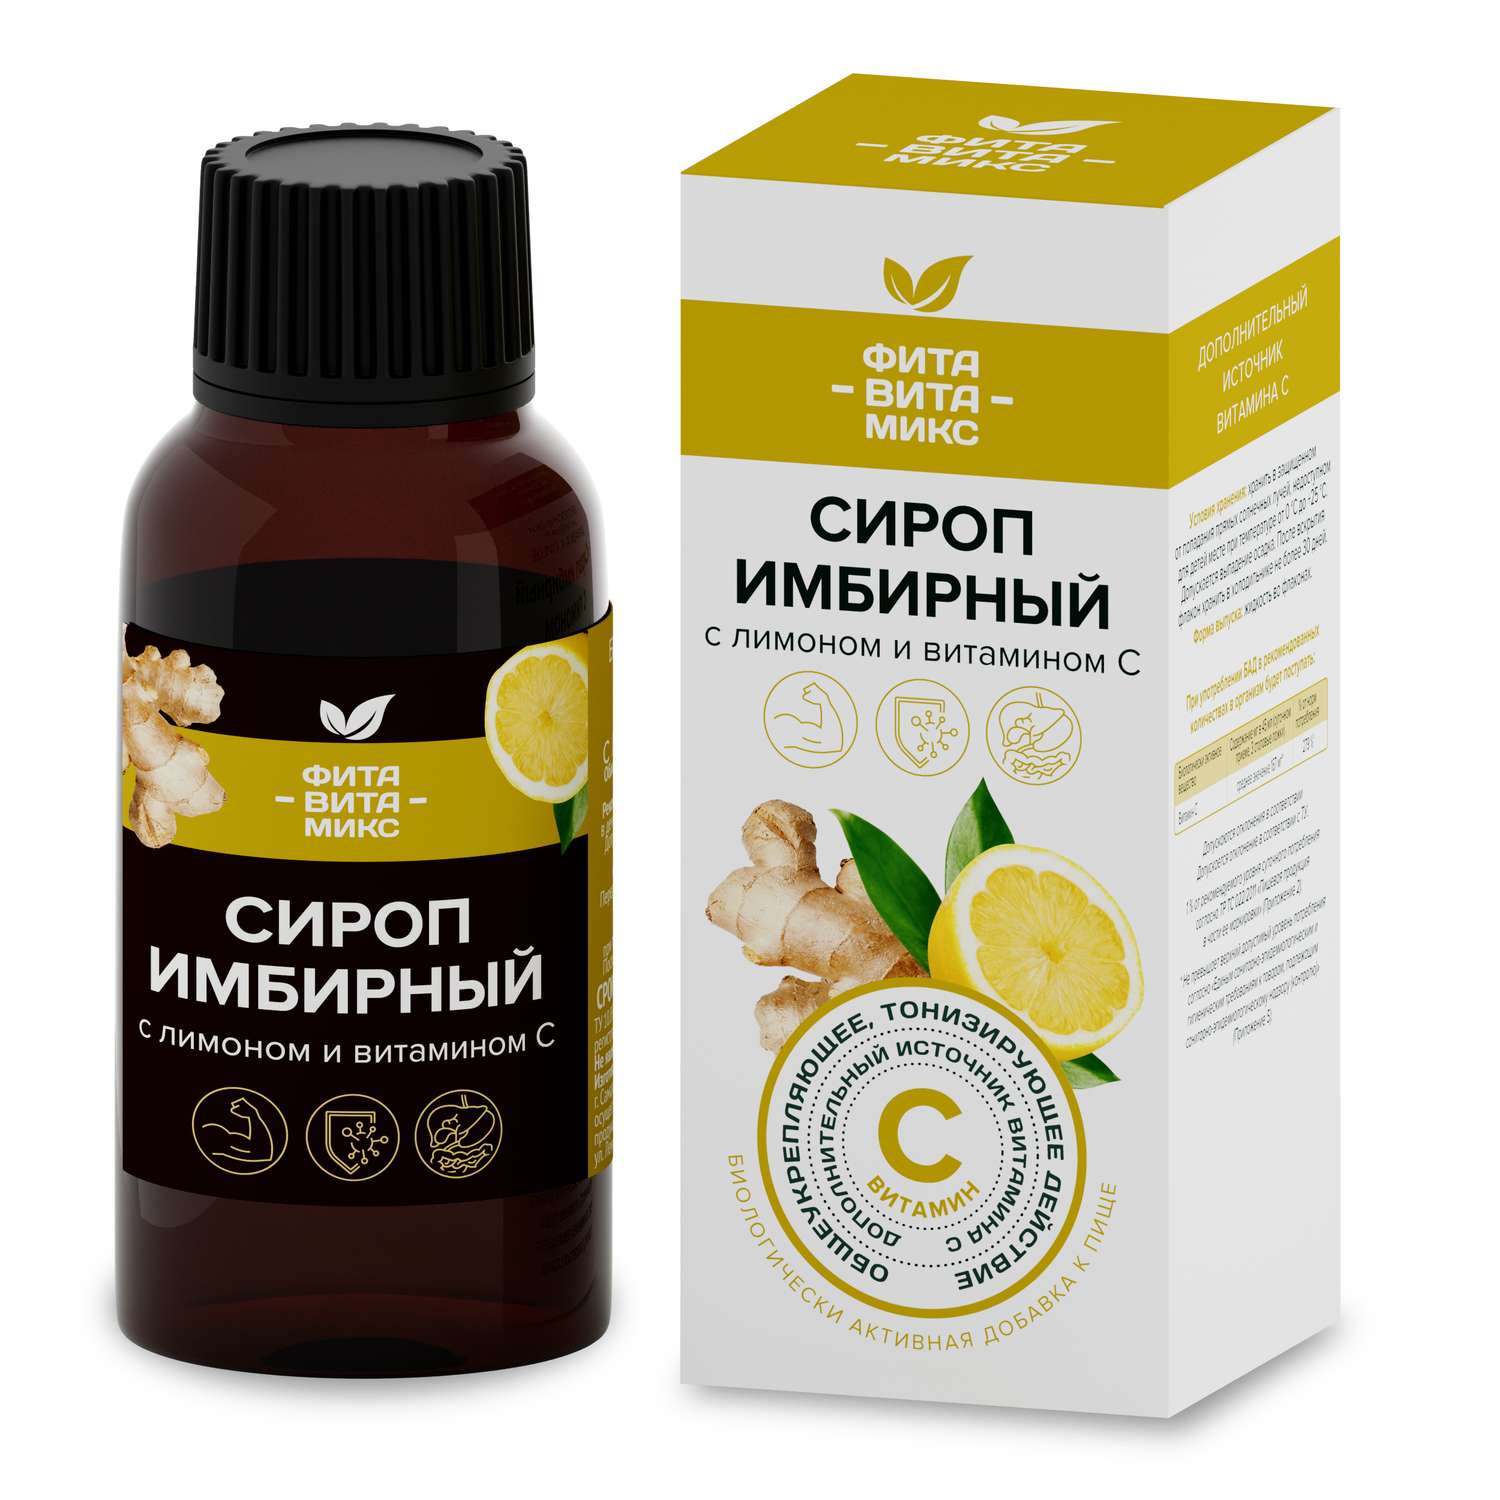 Сироп имбирный ФИТА-ВИТА-МИКС с лимоном и витамином С 100 мл - фото 8